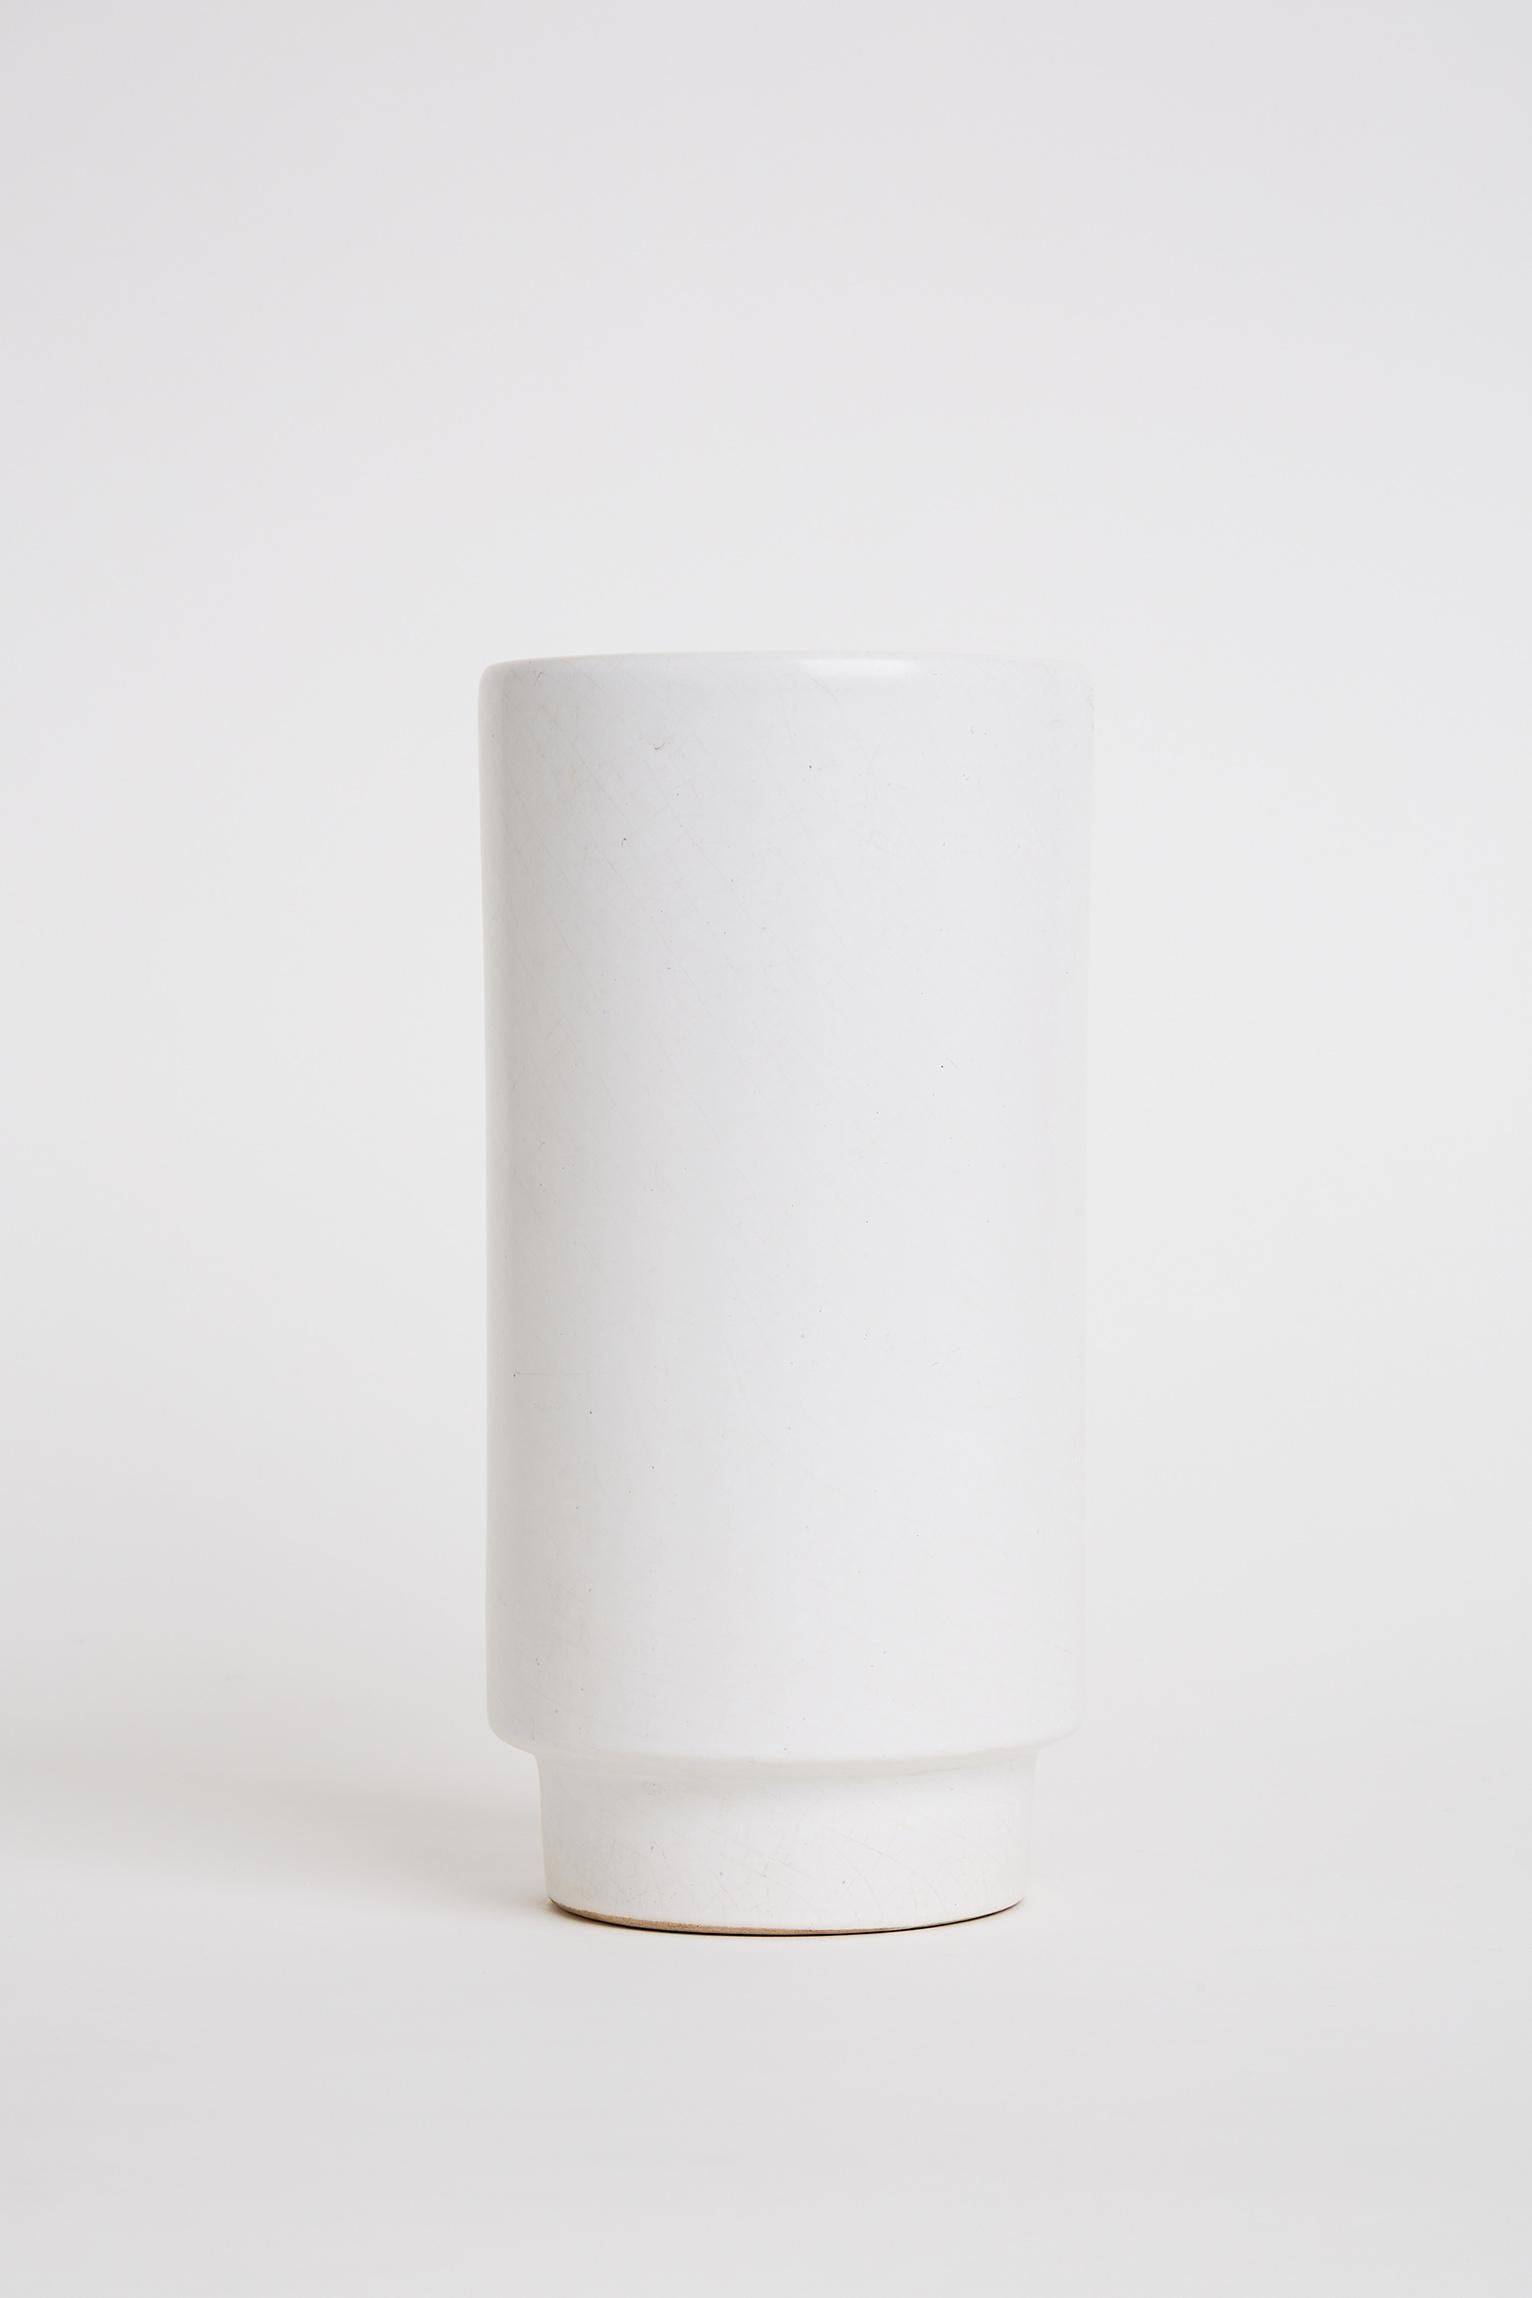 A large white ceramic vase.
Italy, third quarter of the 20th century.